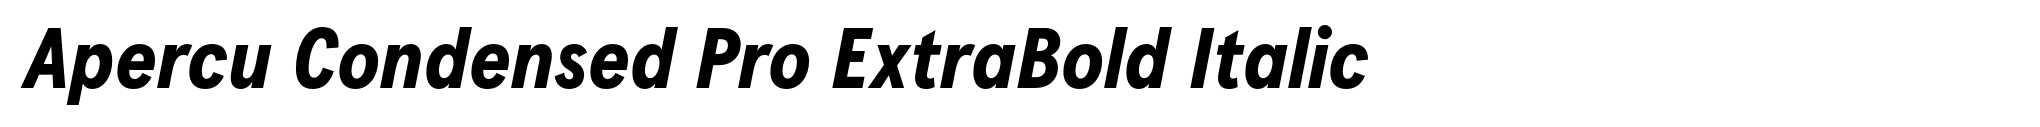 Apercu Condensed Pro ExtraBold Italic image